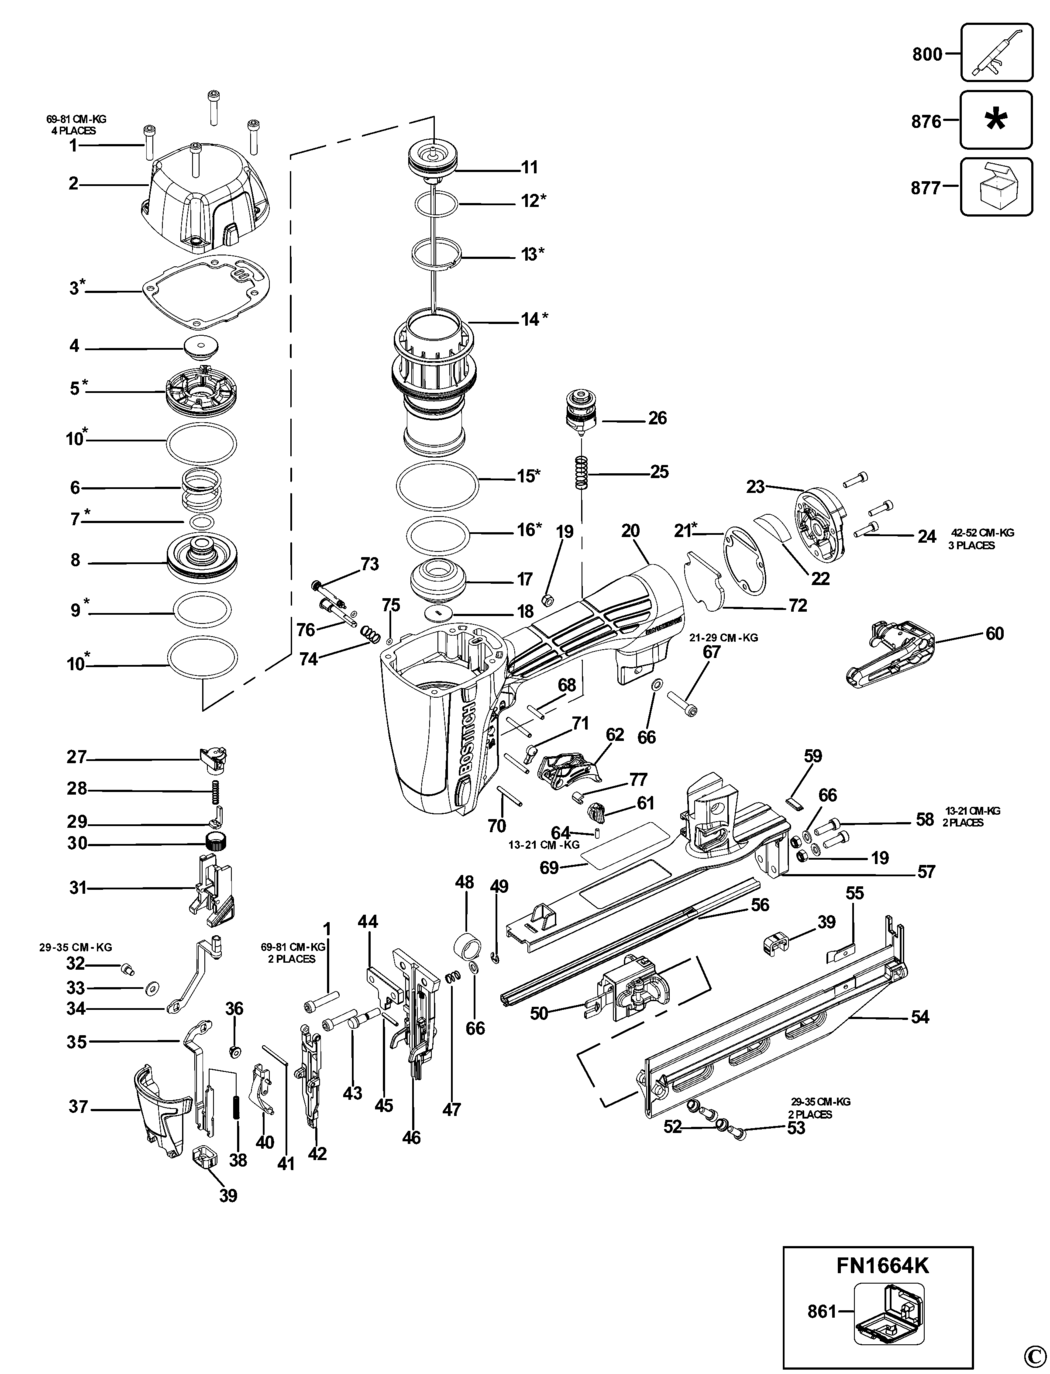 Bostitch FN1664-E Type Rev D Finish Nailer Spare Parts